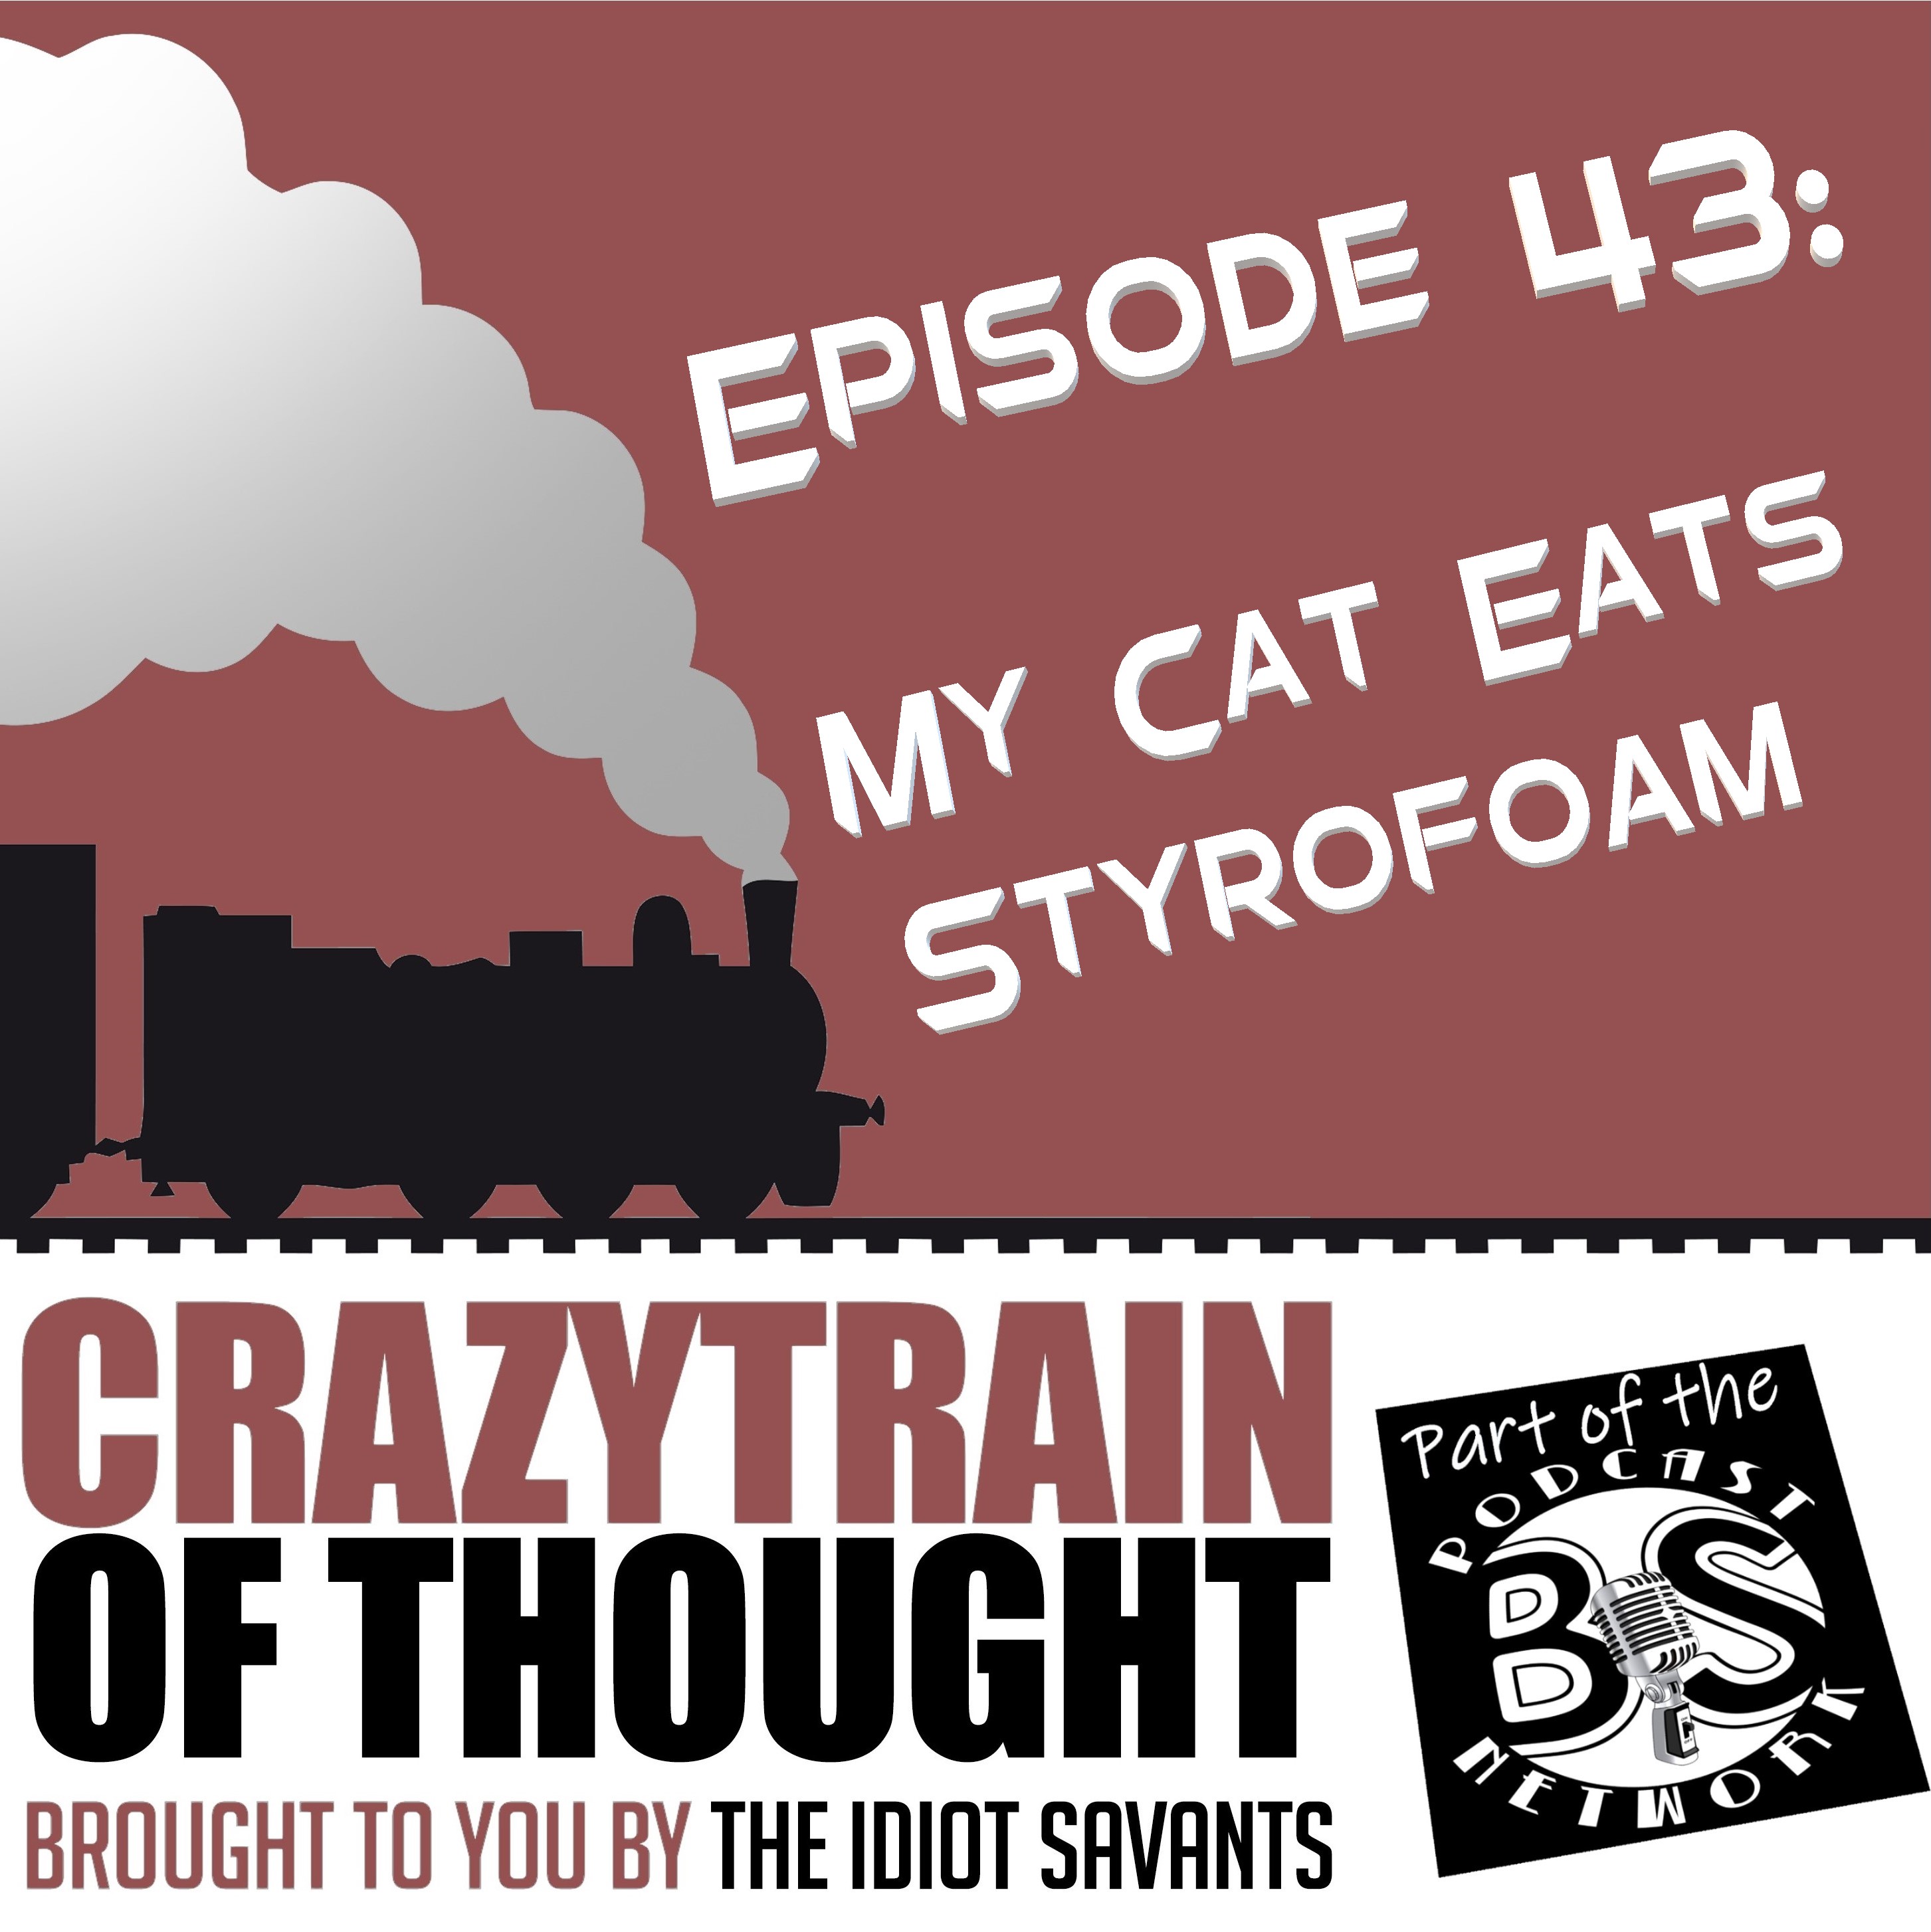 43: My Cat Eats Styrofoam